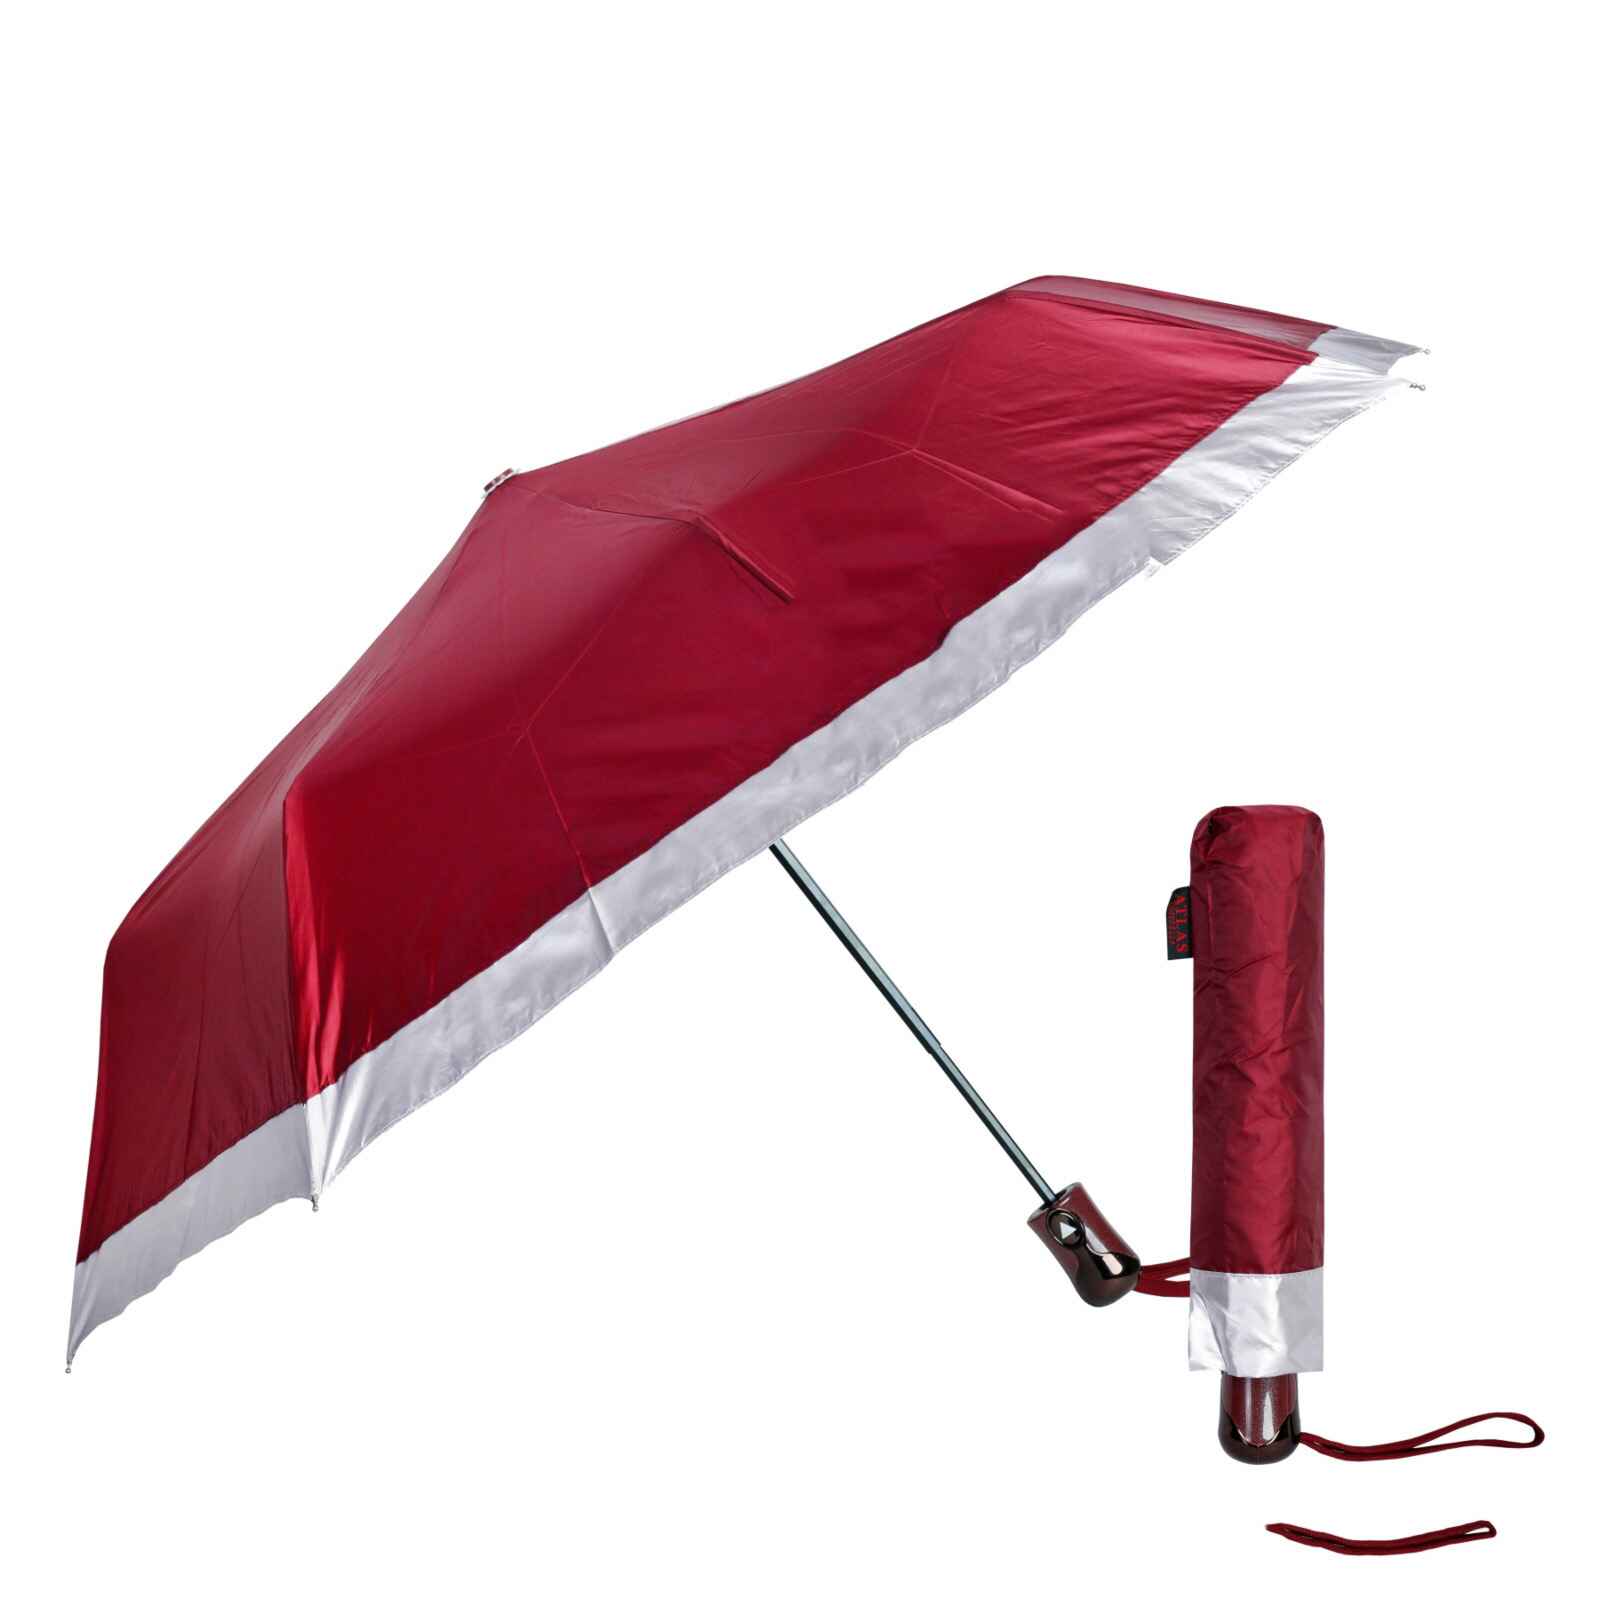 Original Sankar Auto Open 8 Ribs Heavy Duty Umbrella With Cover (2)